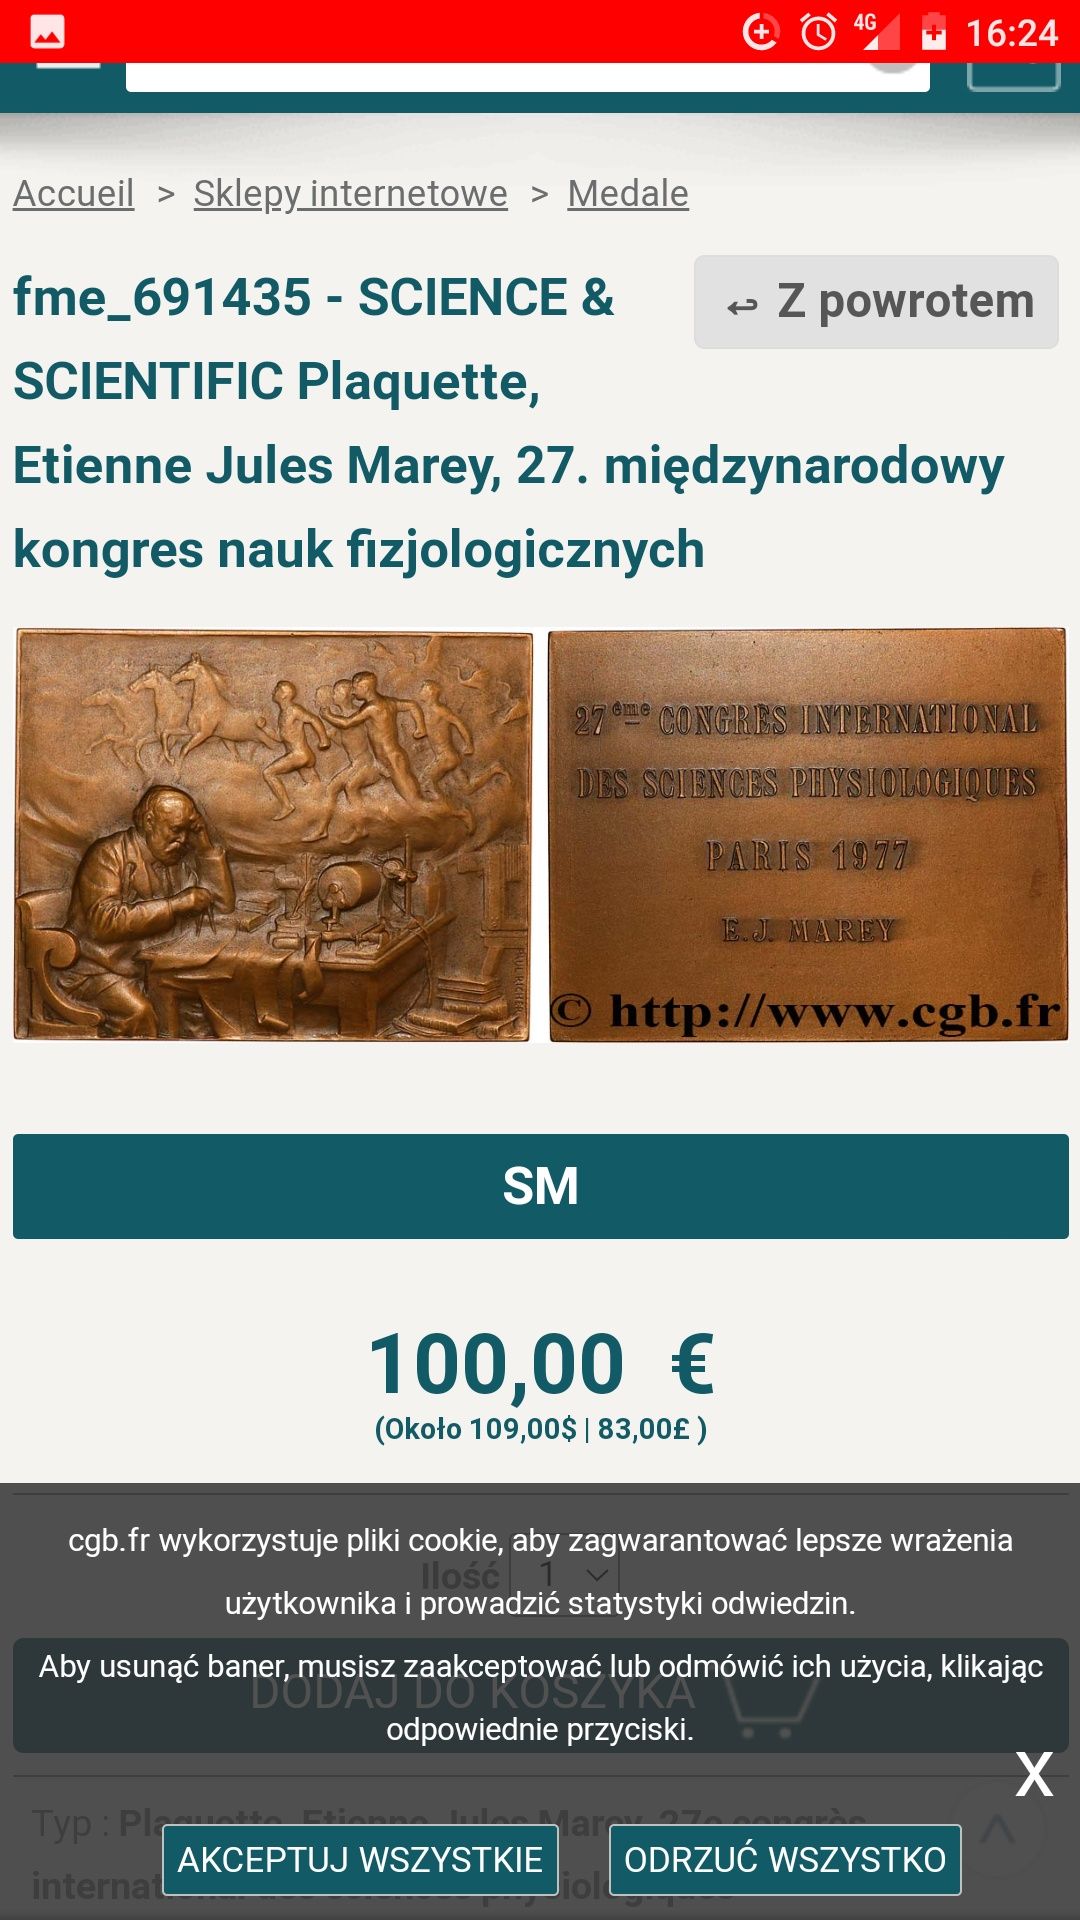 Medal odznaka plakietka Jules Marey 1977 r